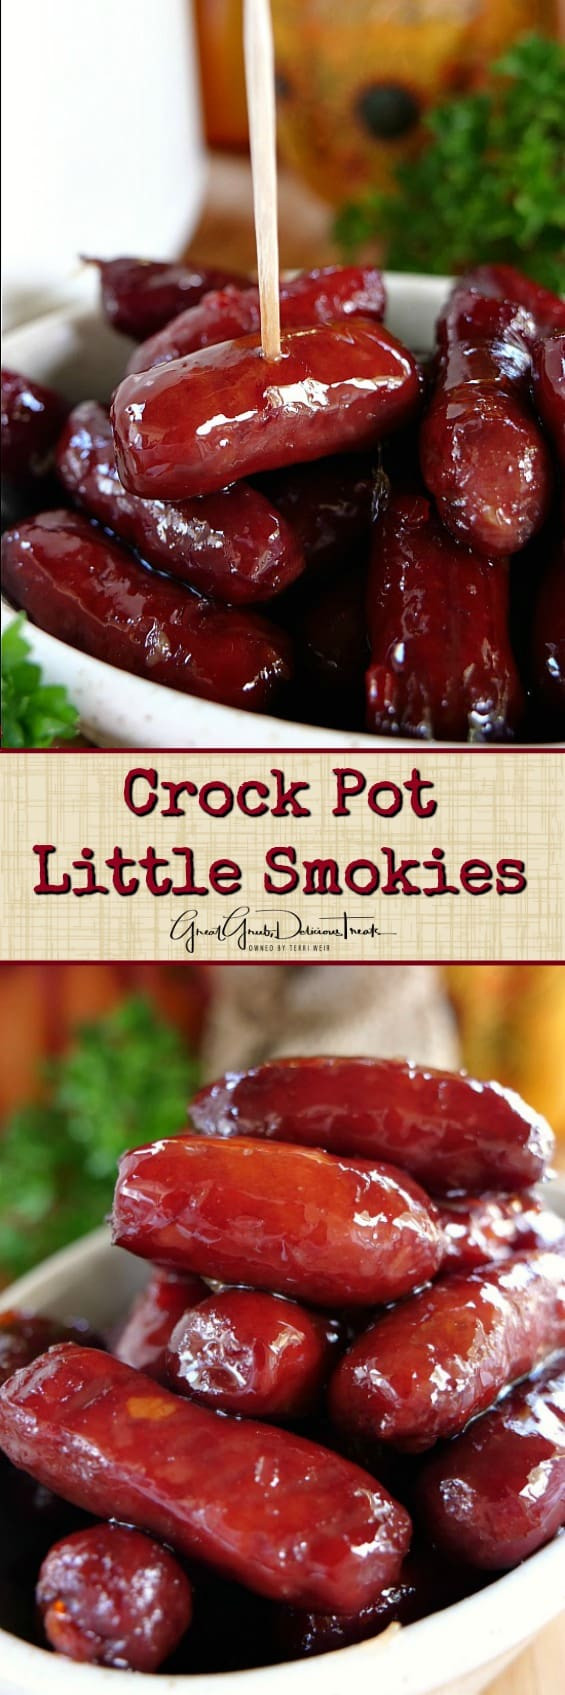 Little Smokies Crockpot Keto
 Crock Pot Little Smokies Great Grub Delicious Treats